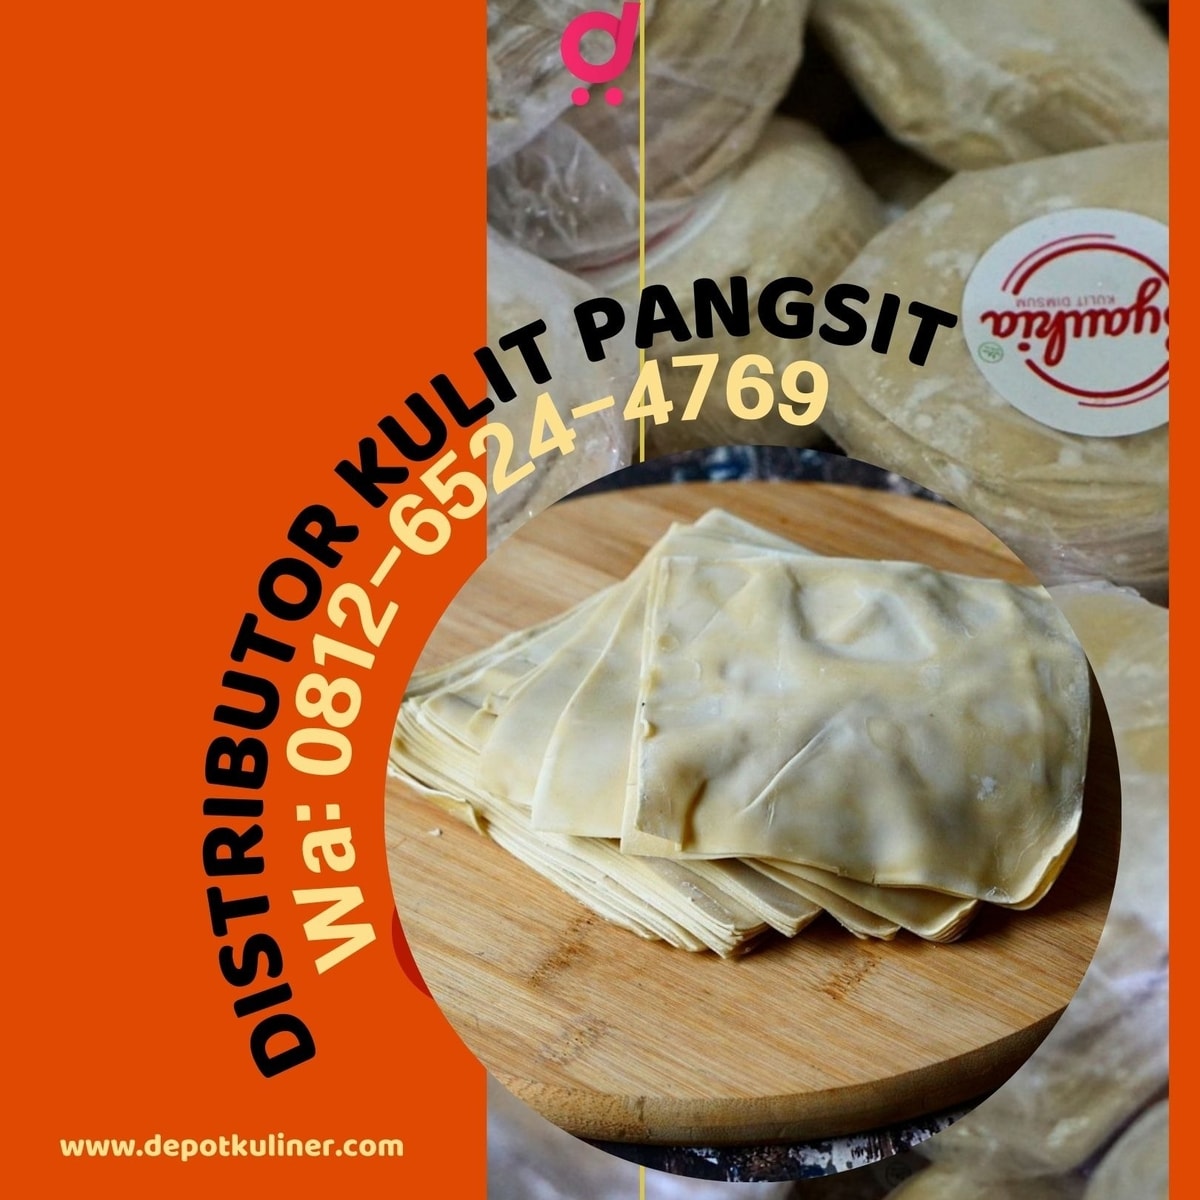 HARGA GROSIR, Call 0812-6524-4769, Distributor Kulit Pangsit